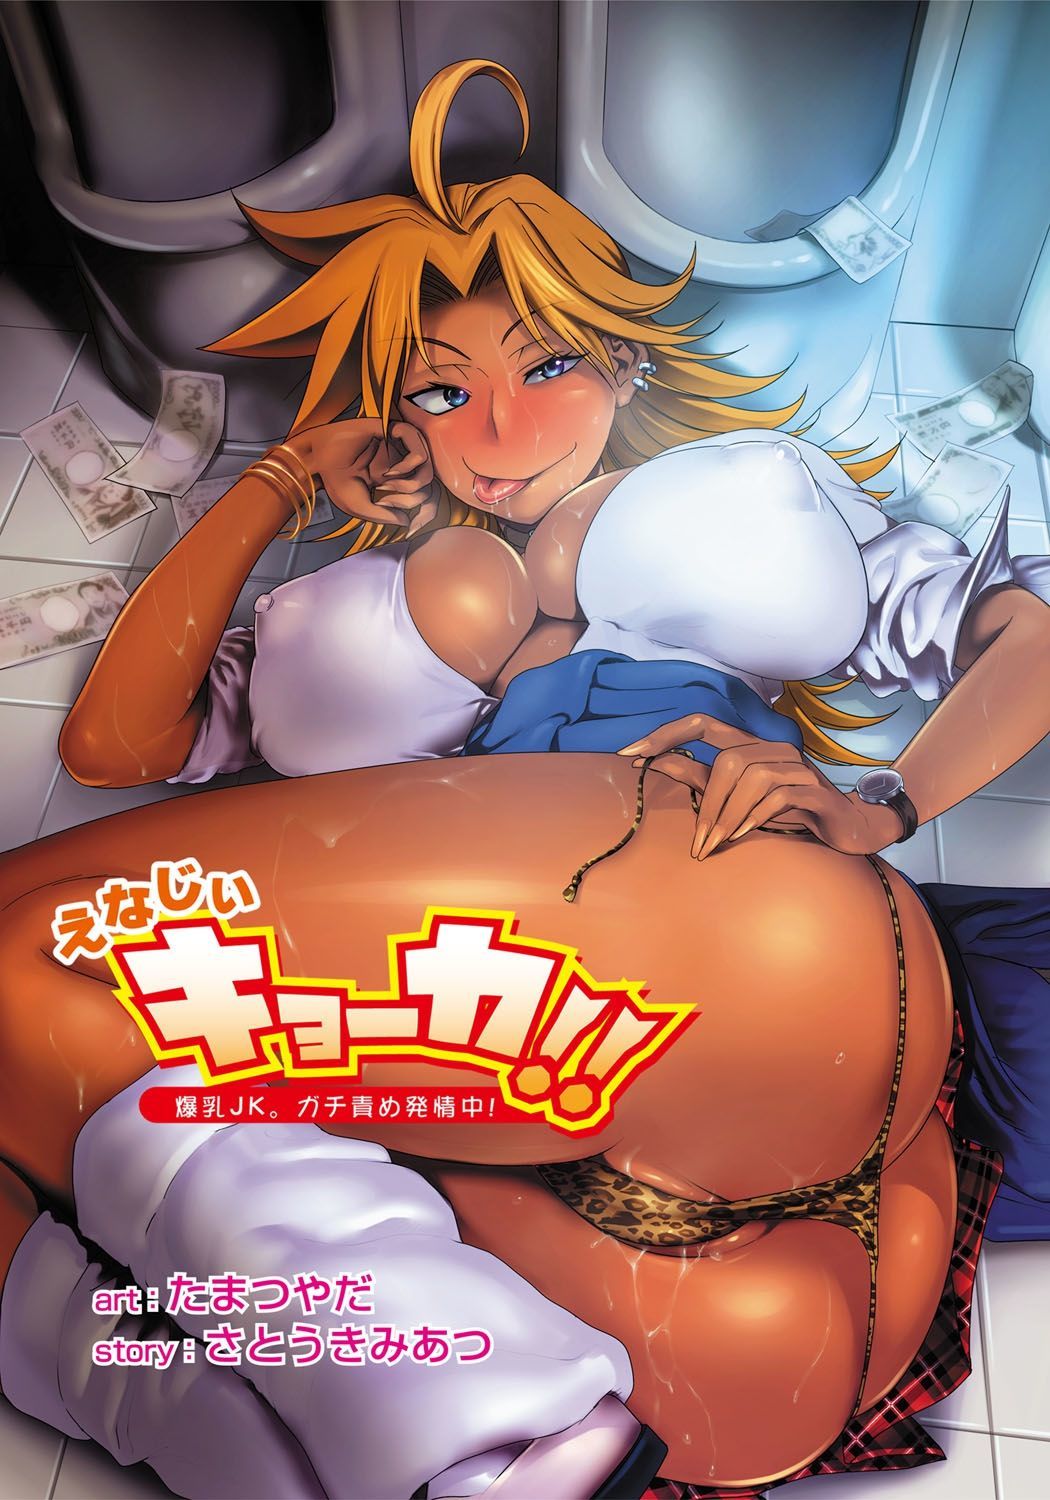 Energy Kyouka! - Hentai Manga and Doujinshi Collection